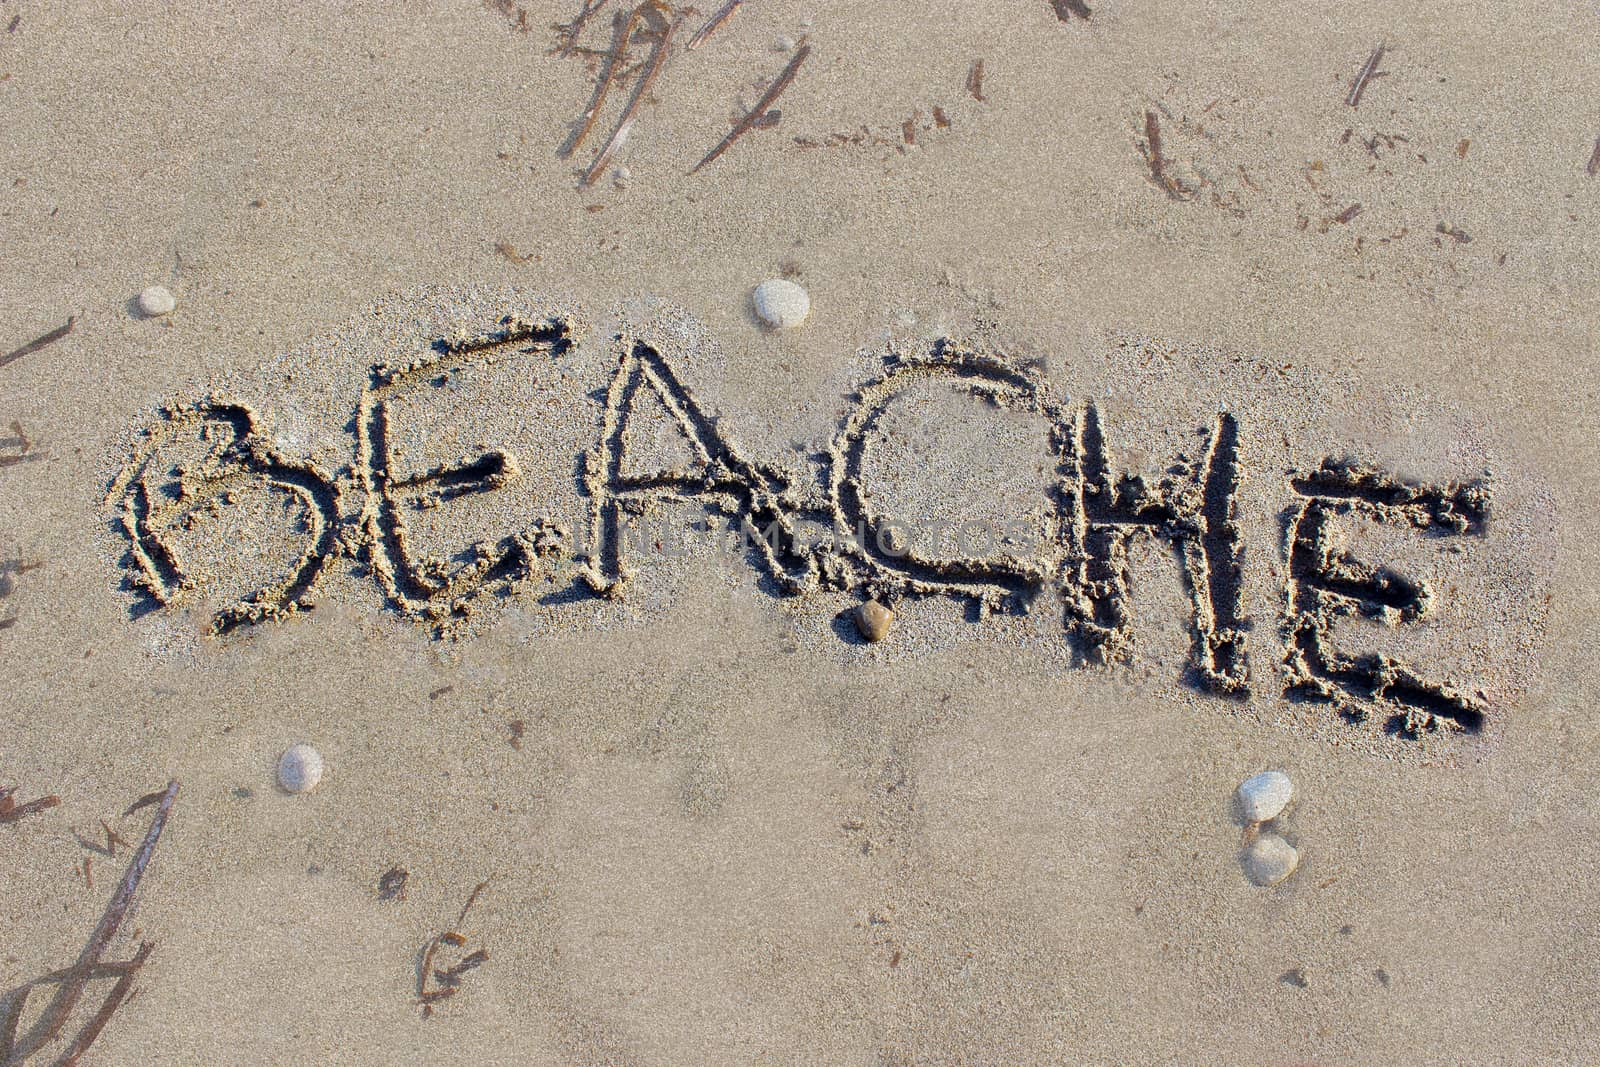 "Beach" written in the sand on the beach